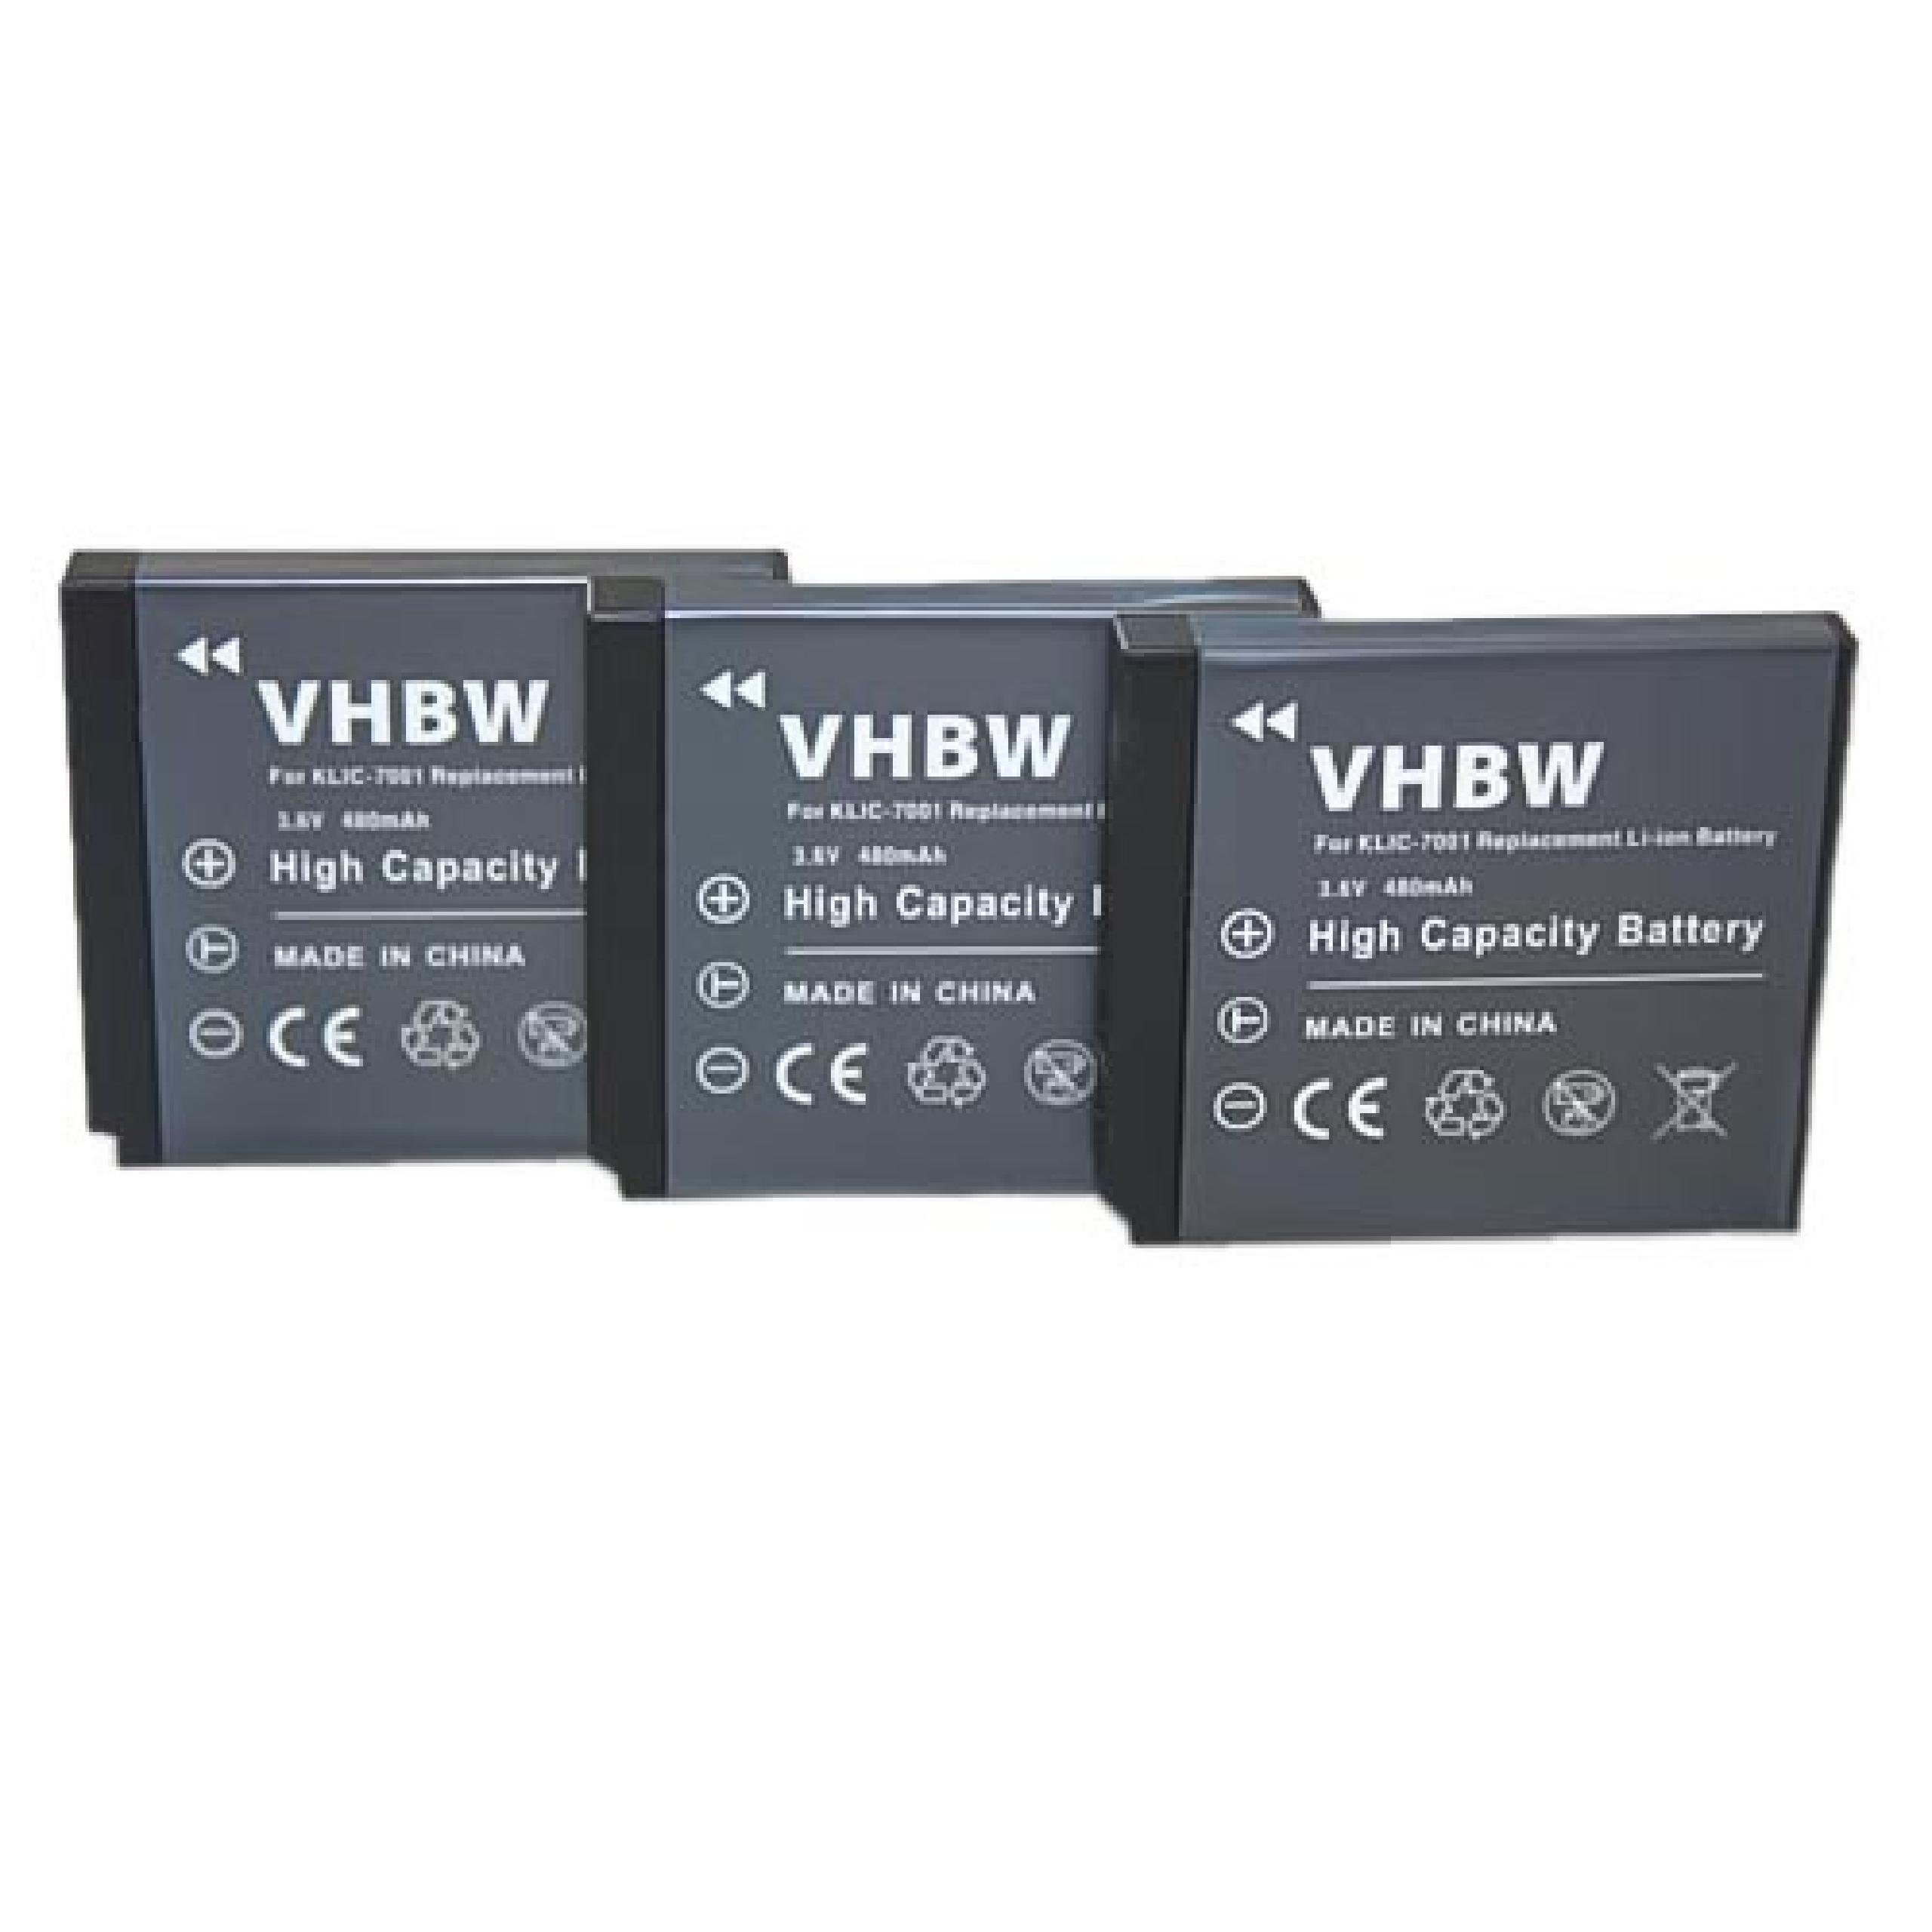 vhbw kompatibel mit Rollei Compactline 200, CL200, CL-200DXG Kamera-Akku Li-Ion 650 mAh (3,6 V)